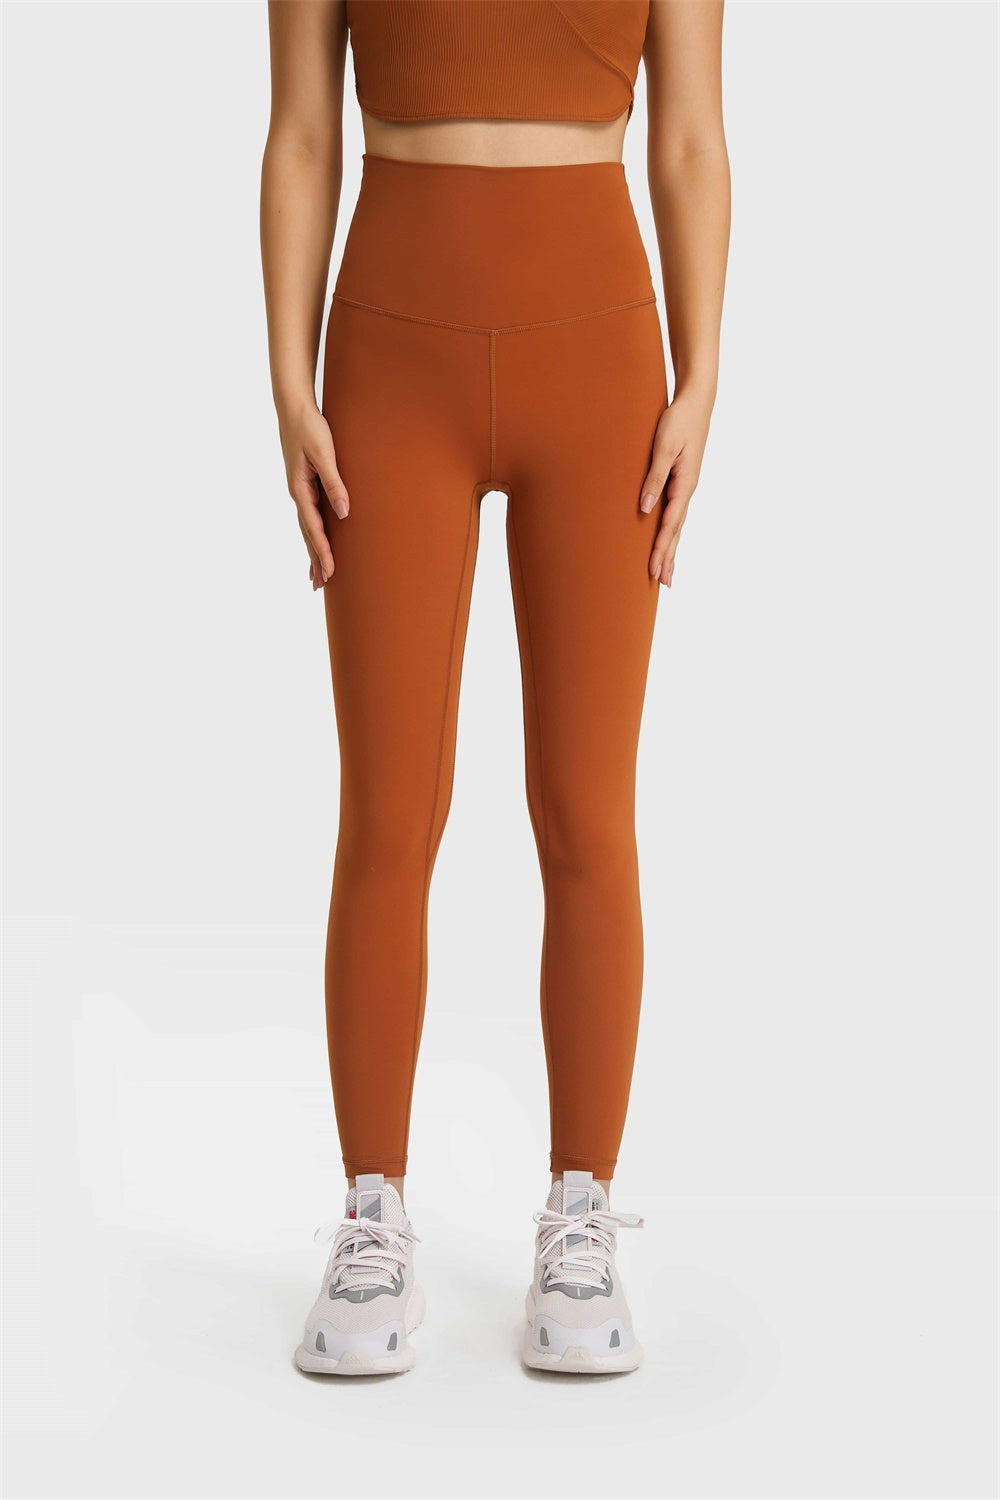 Feel Like Skin Elastic Waistband Yoga Leggings Print on any thing USA/STOD clothes